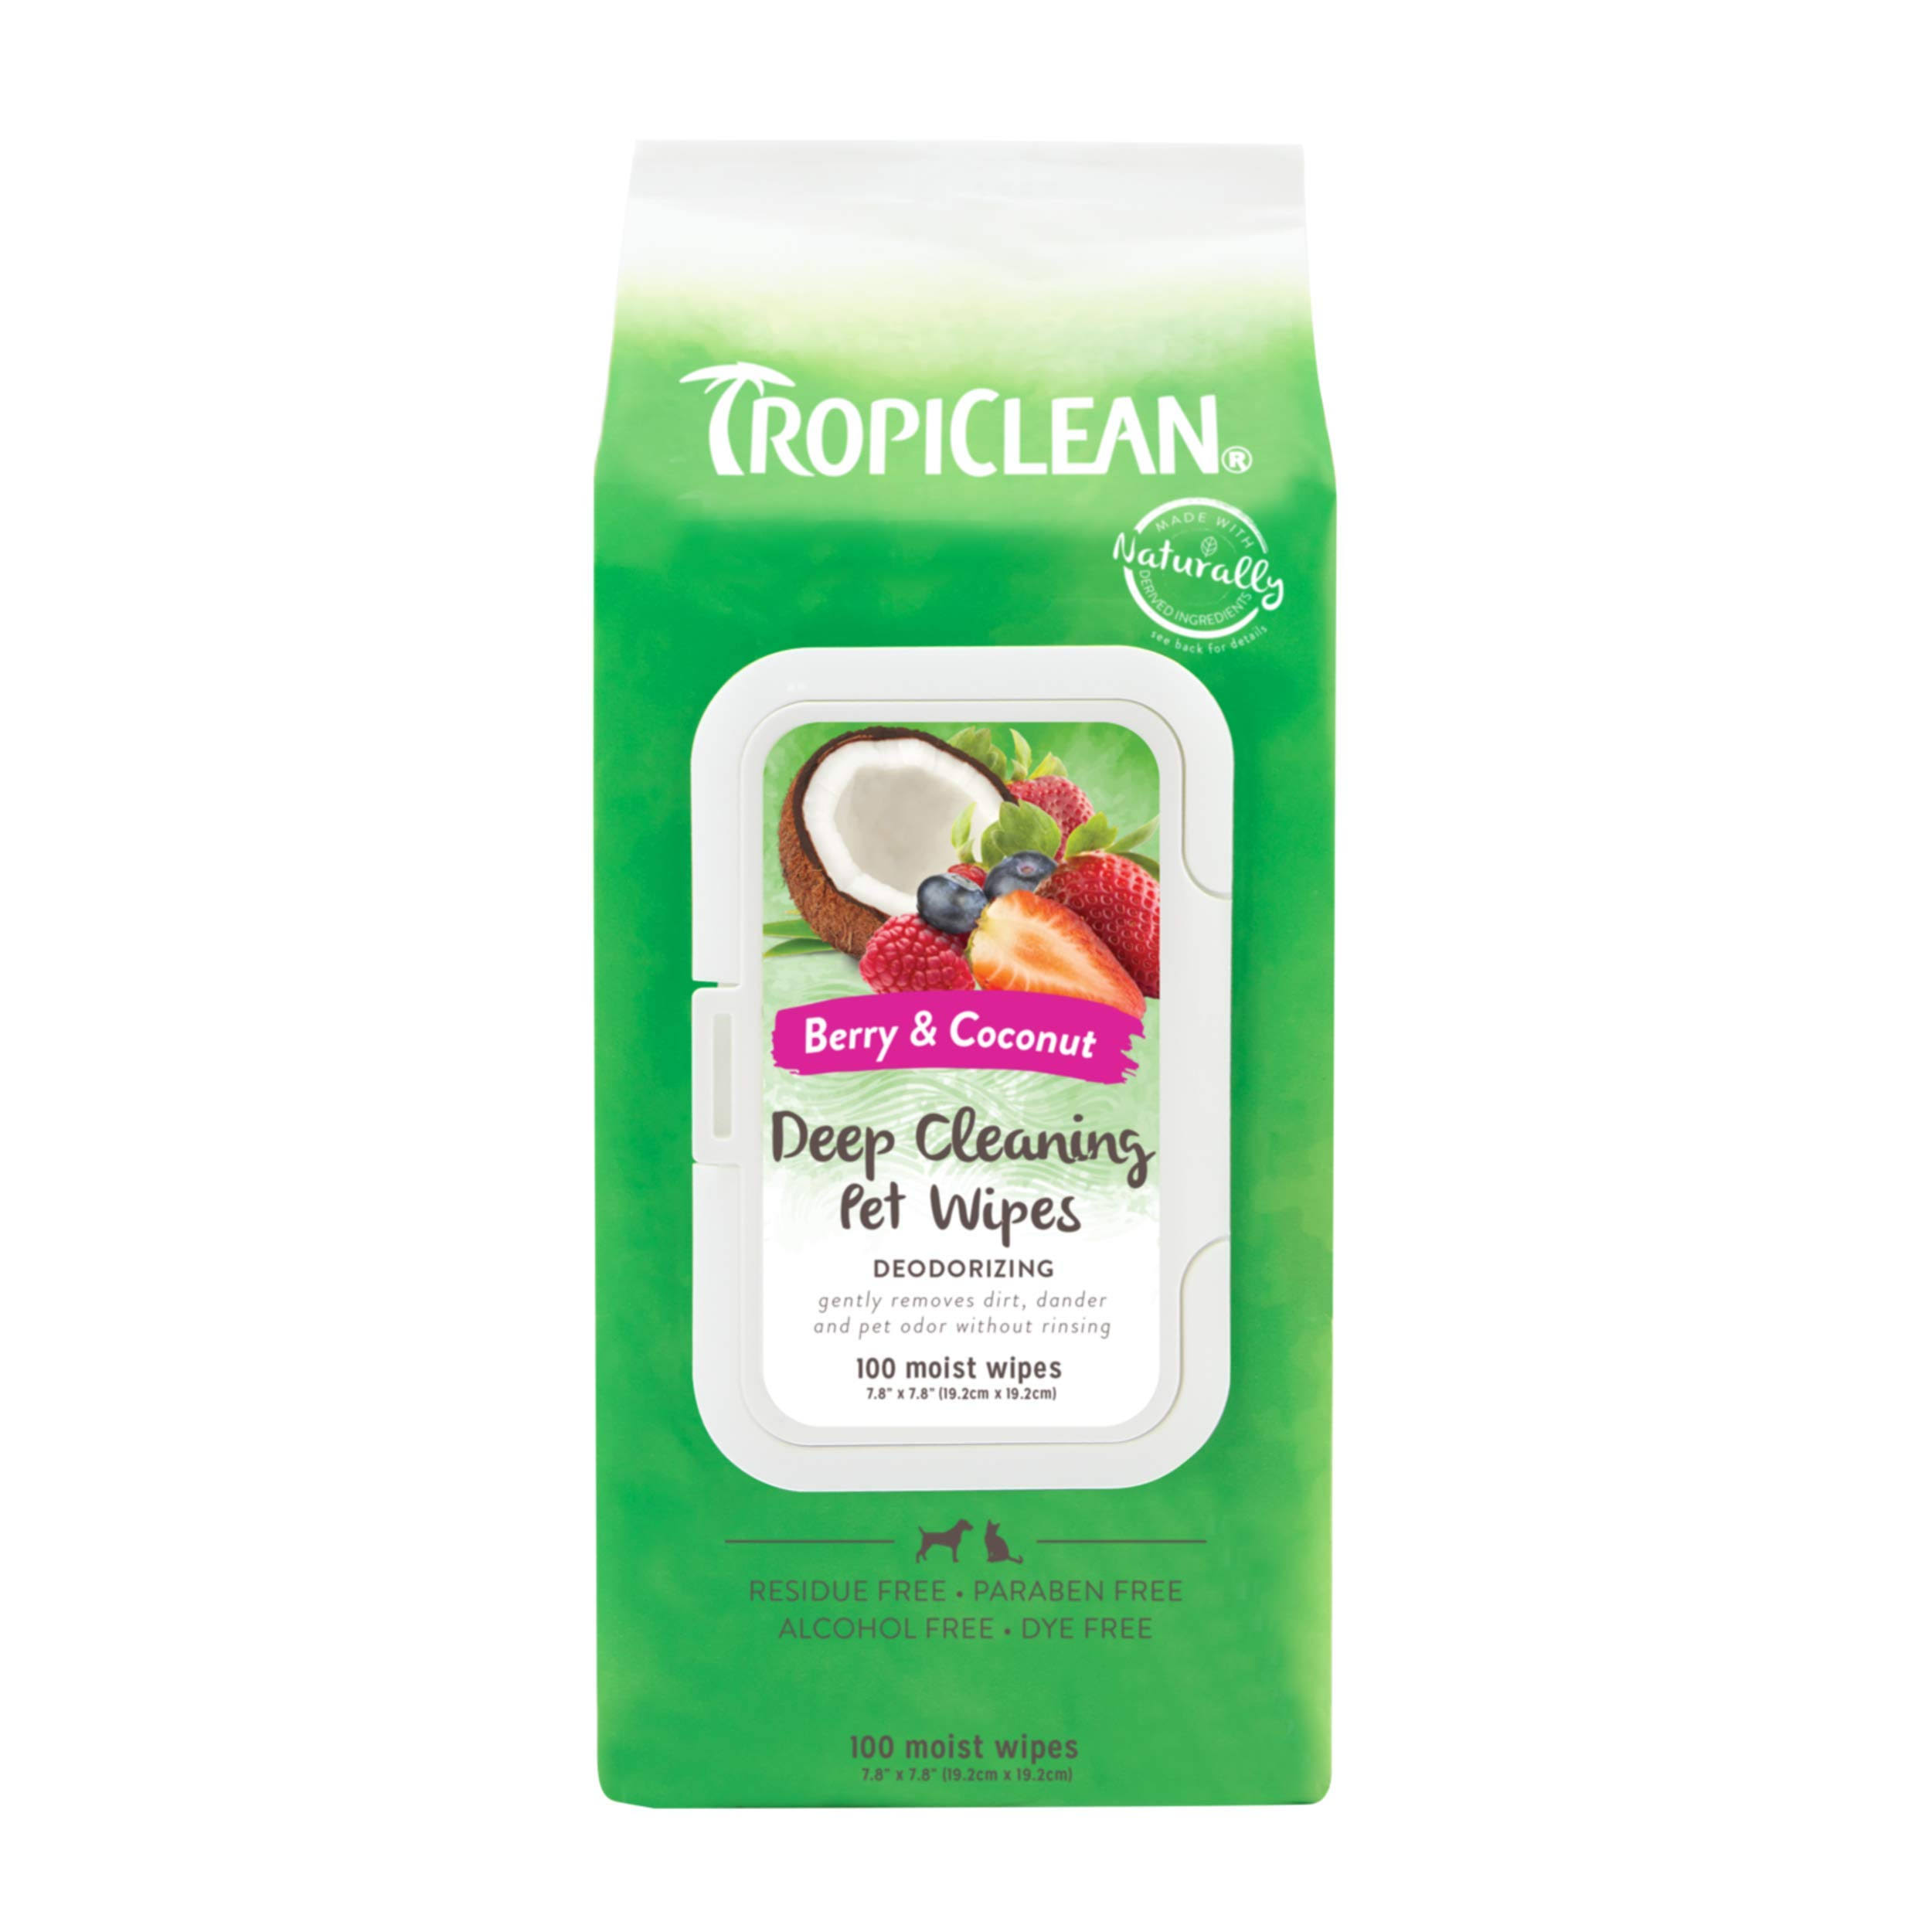 Tropiclean Deep Cleaning Deodorizing Pet Wipes - 100 ct